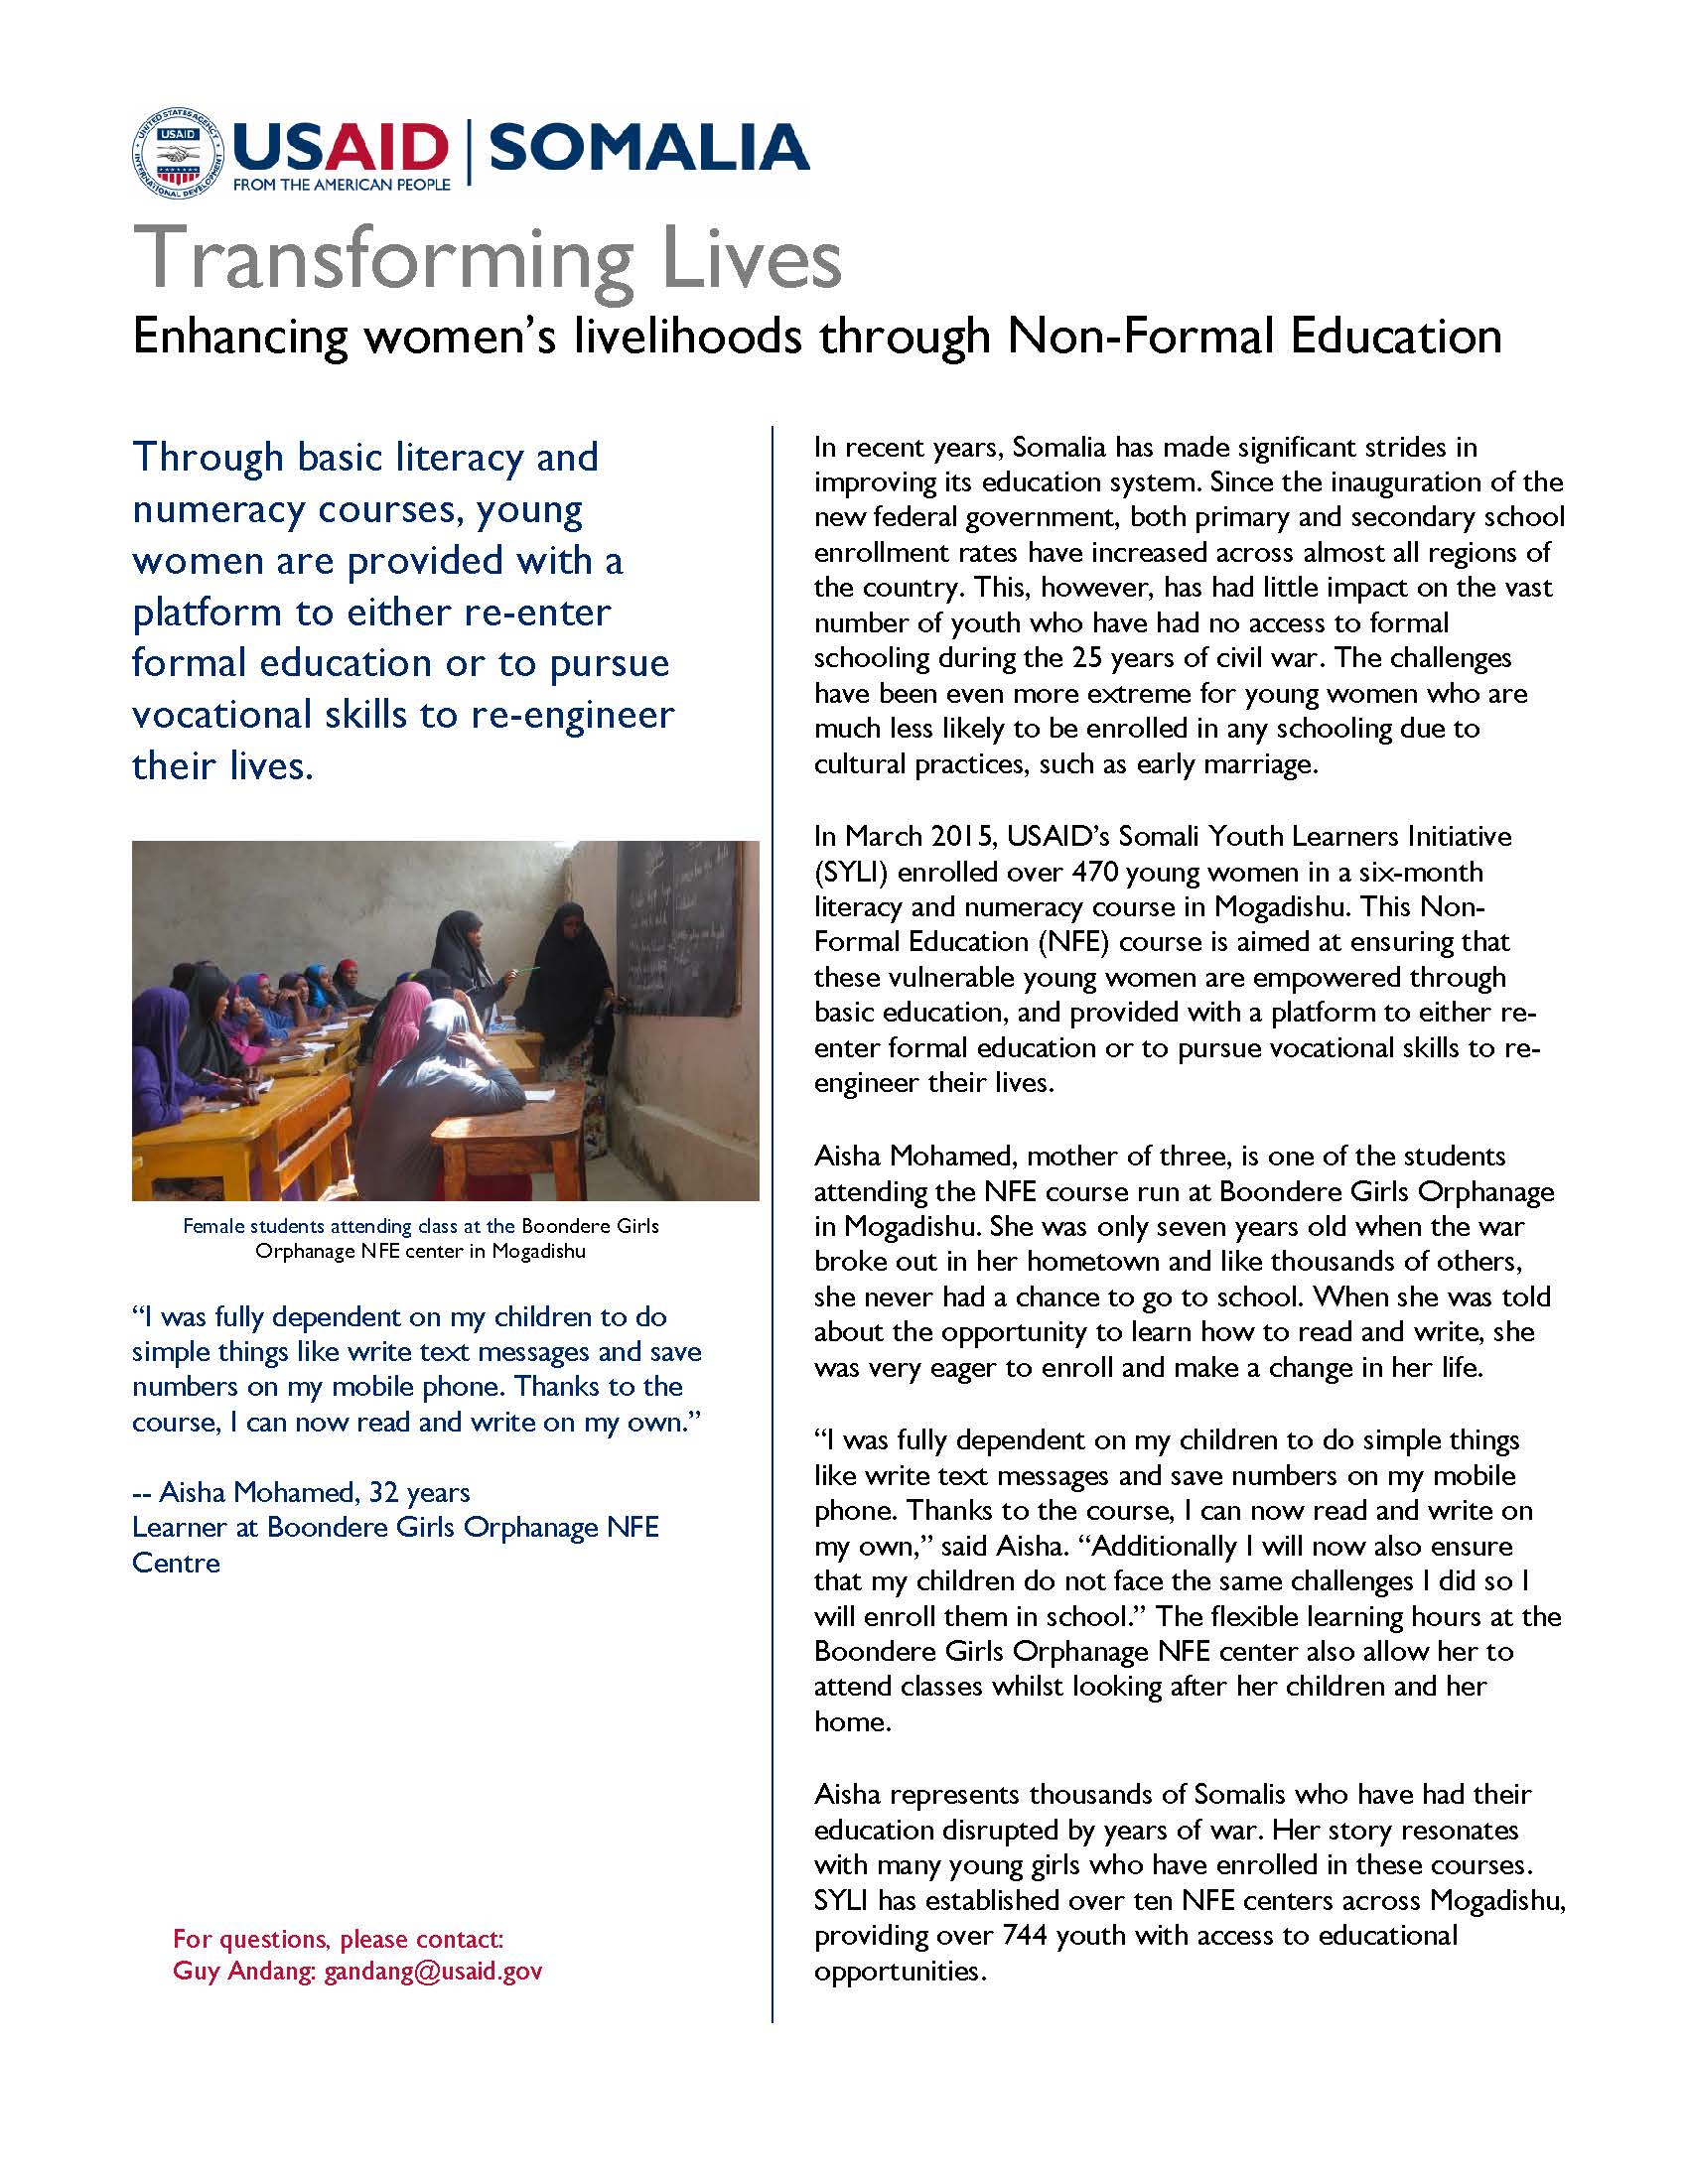 Enhancing women’s livelihoods through Non-Formal Education